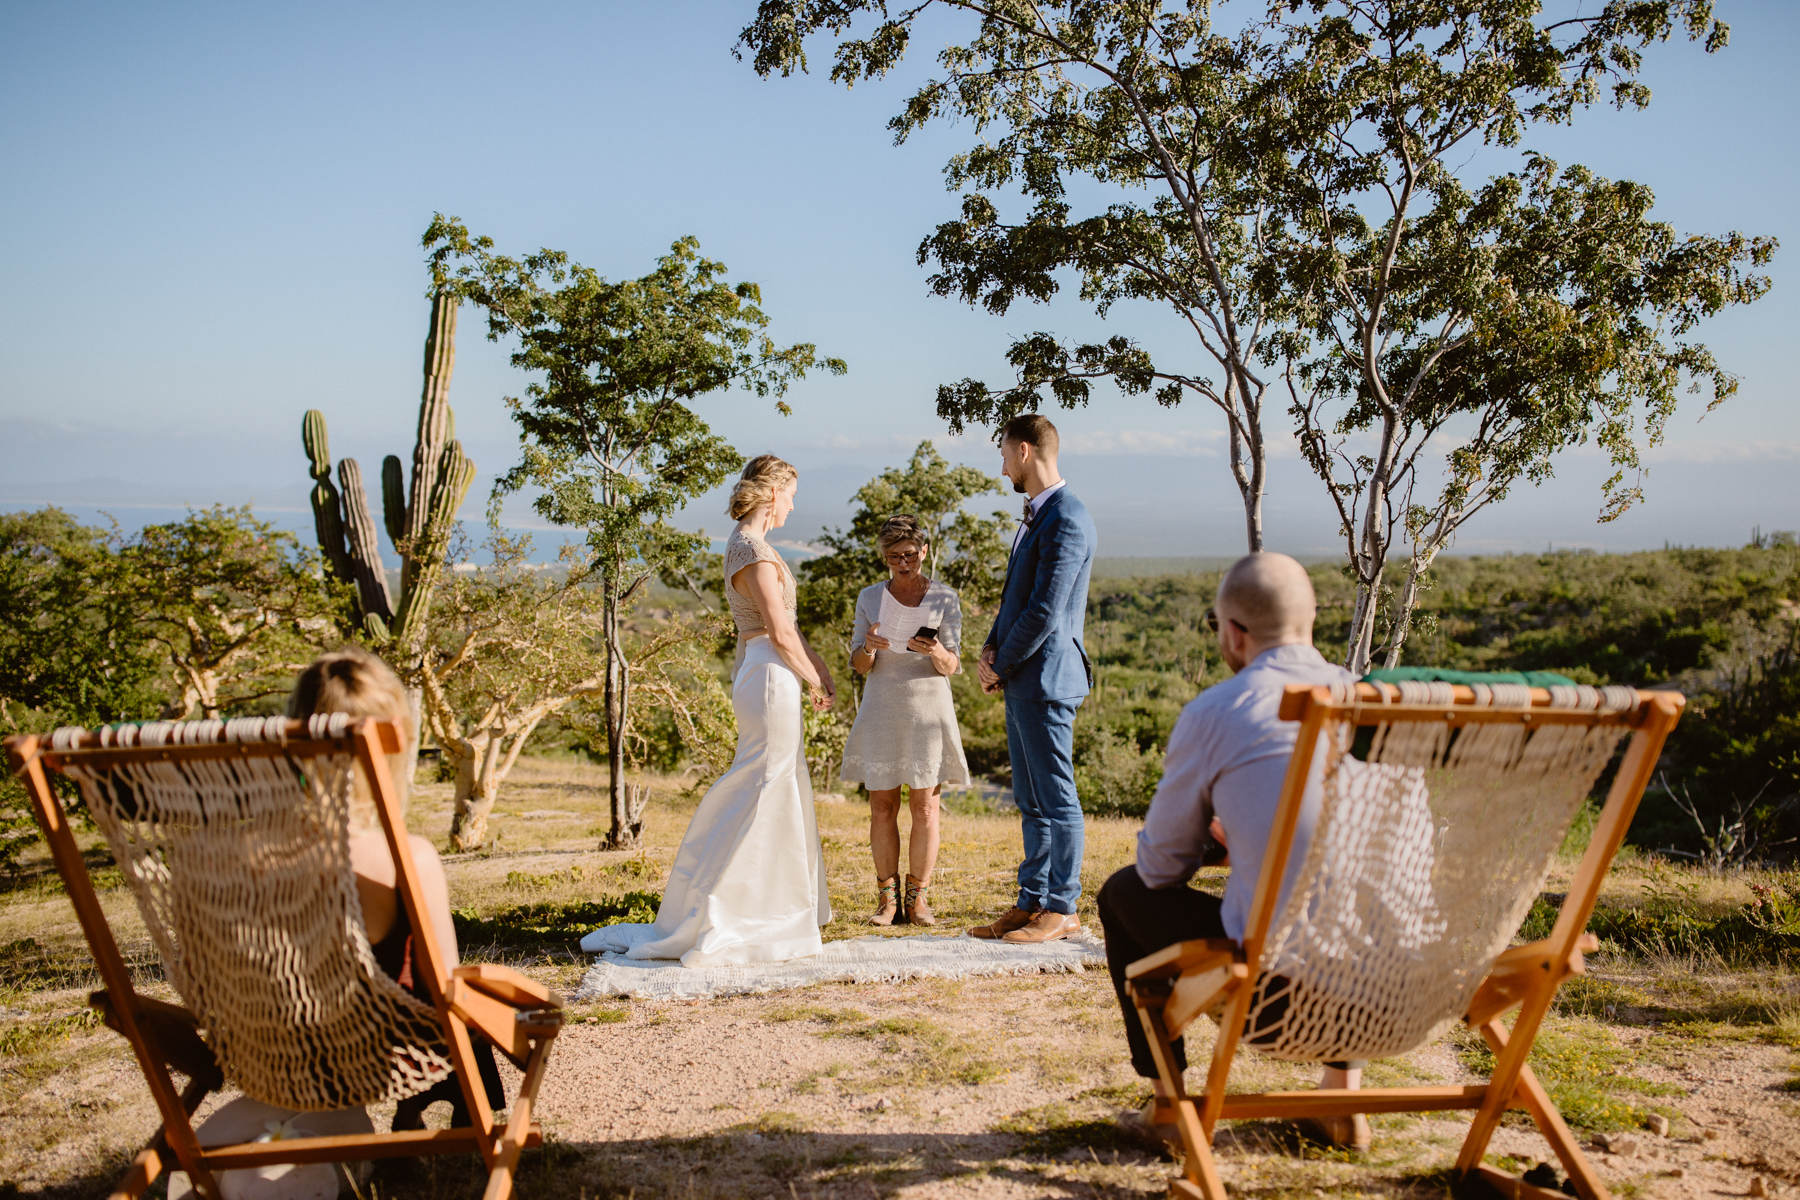 Cabo wedding photographers for a La Ventana Destination Elopement - Image 30